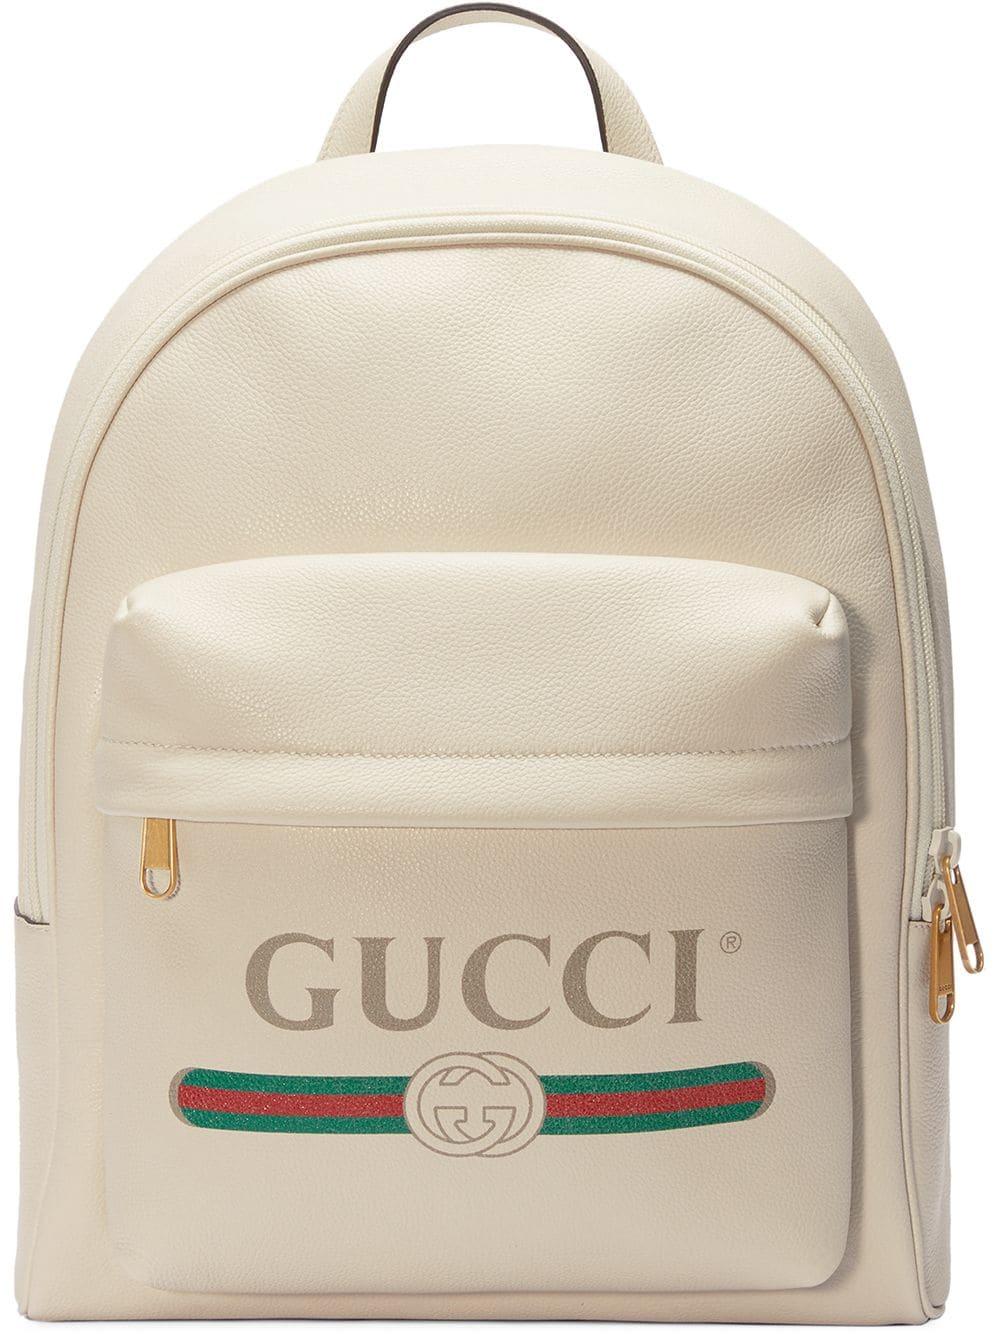 gucci backpack women